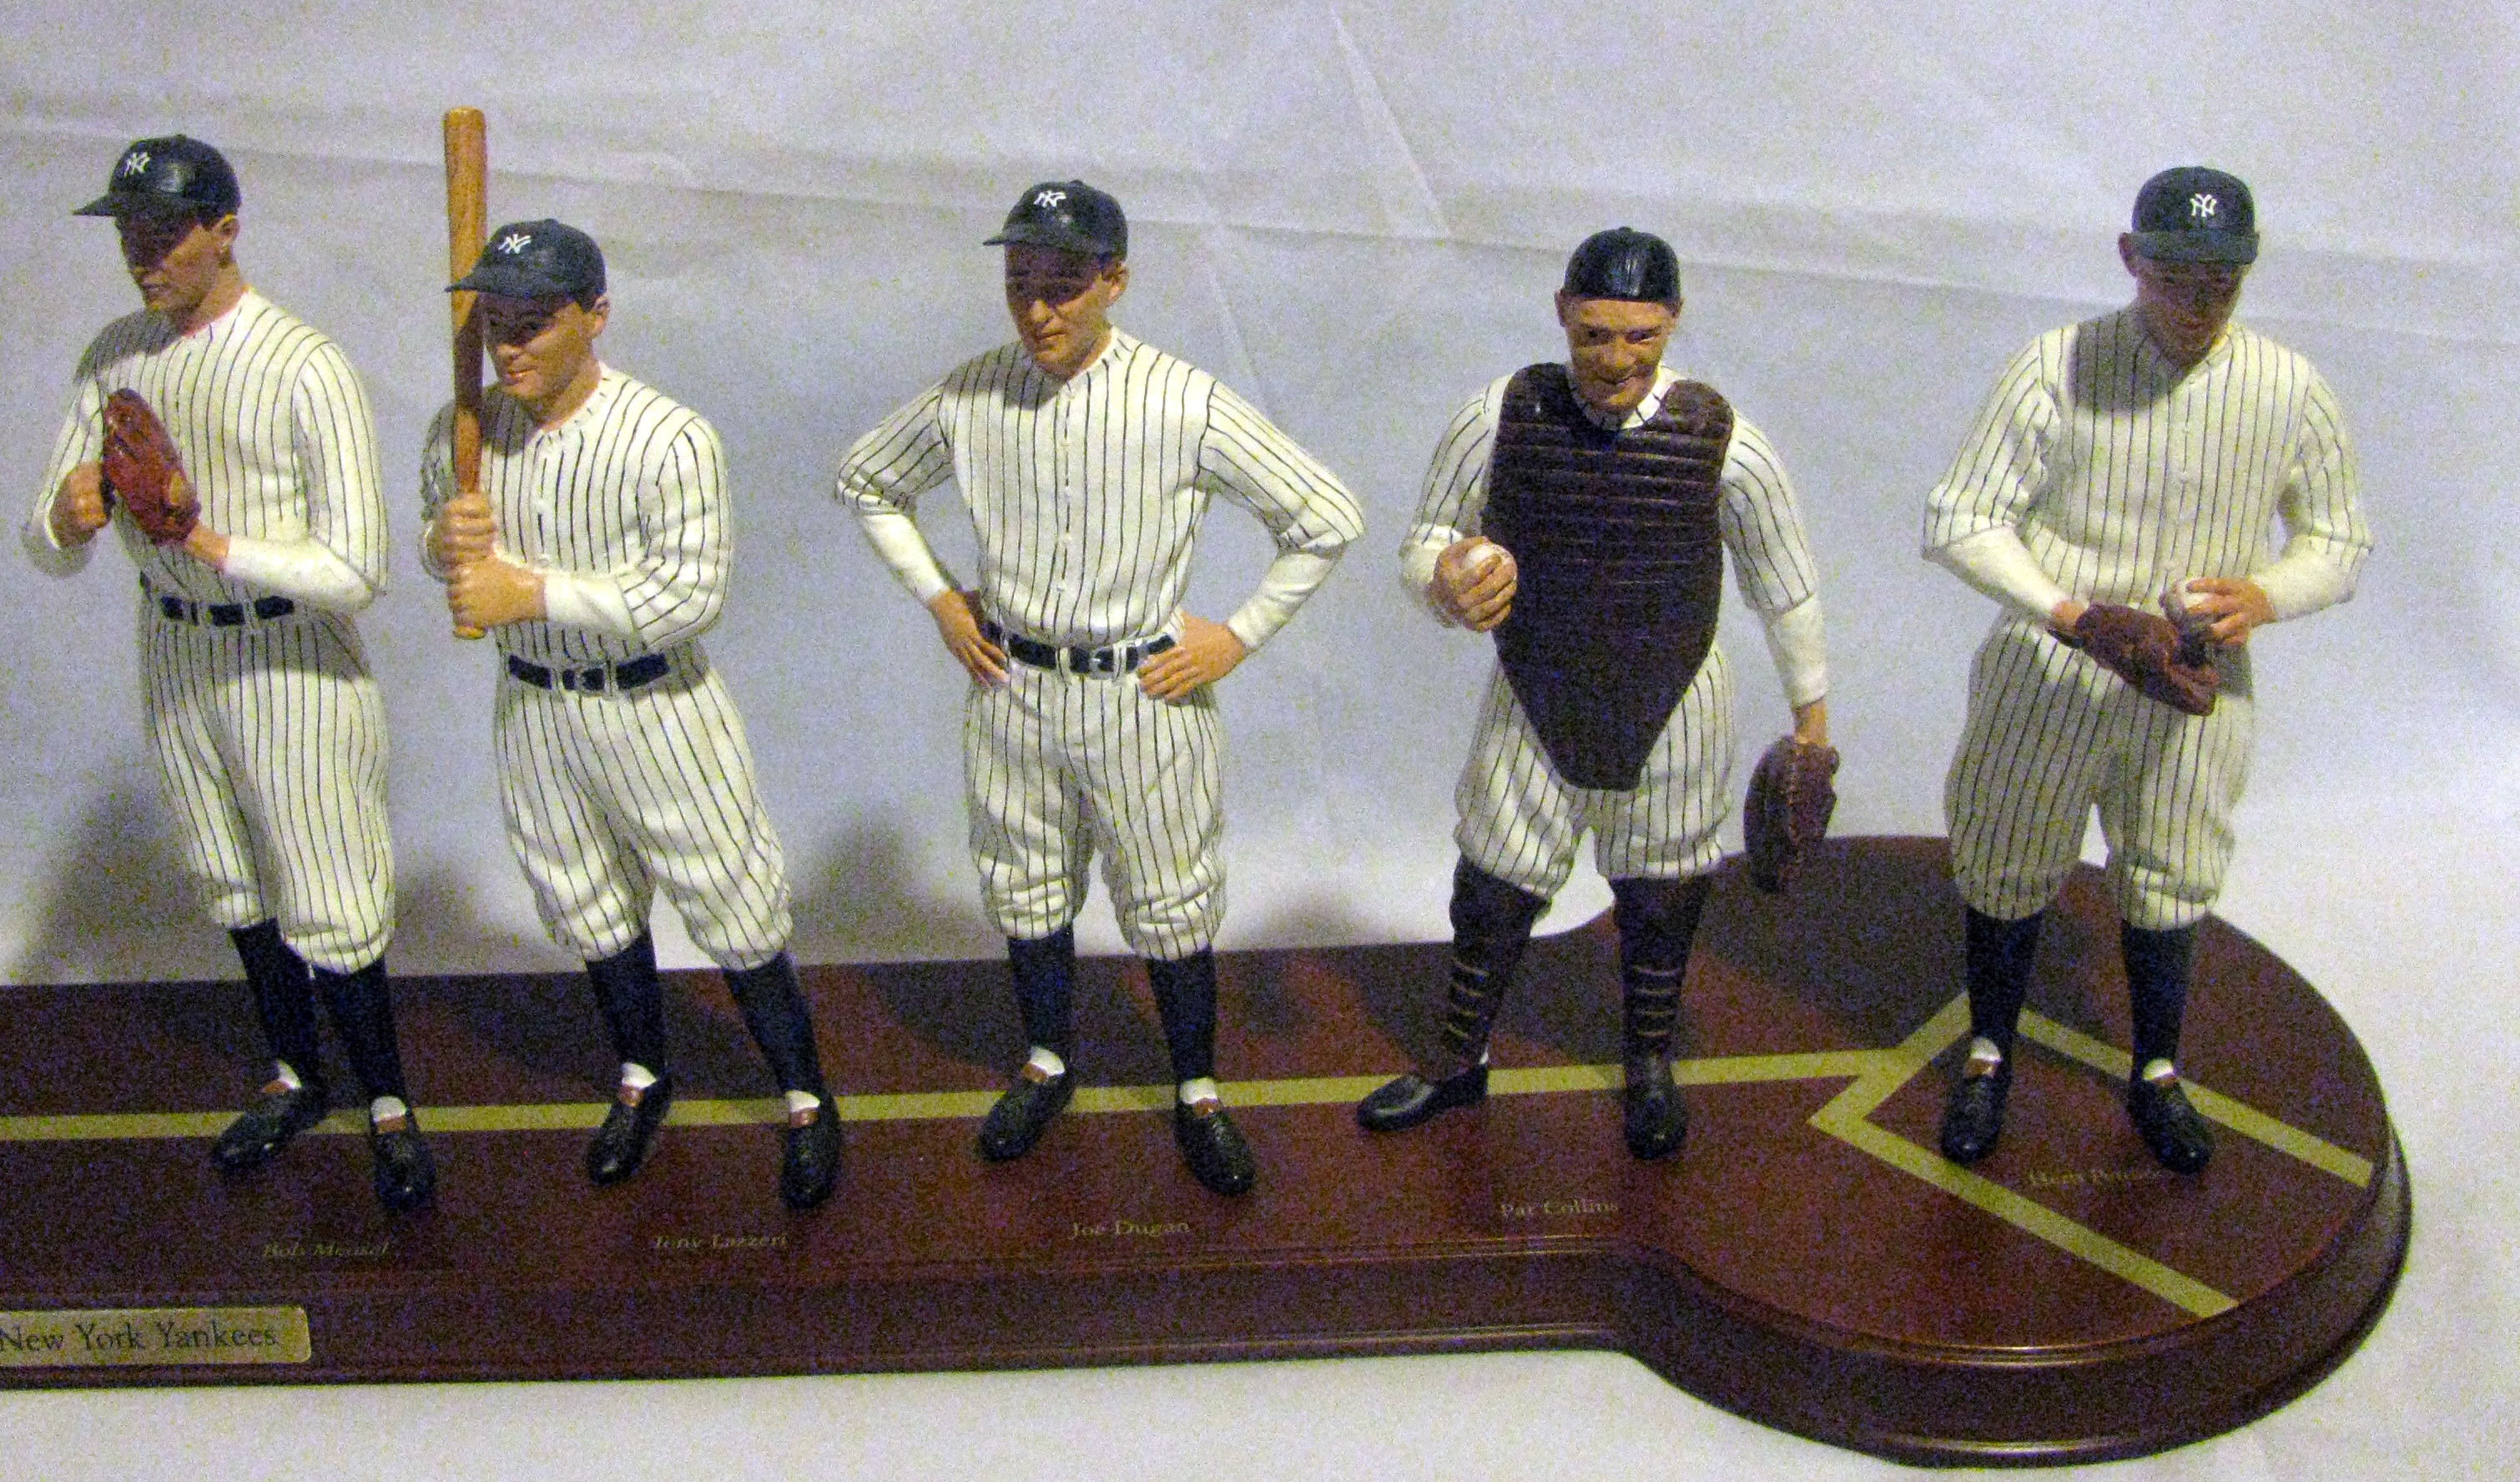 Danbury Mint 1927 New York Yankees Murderers Row Team Figurine